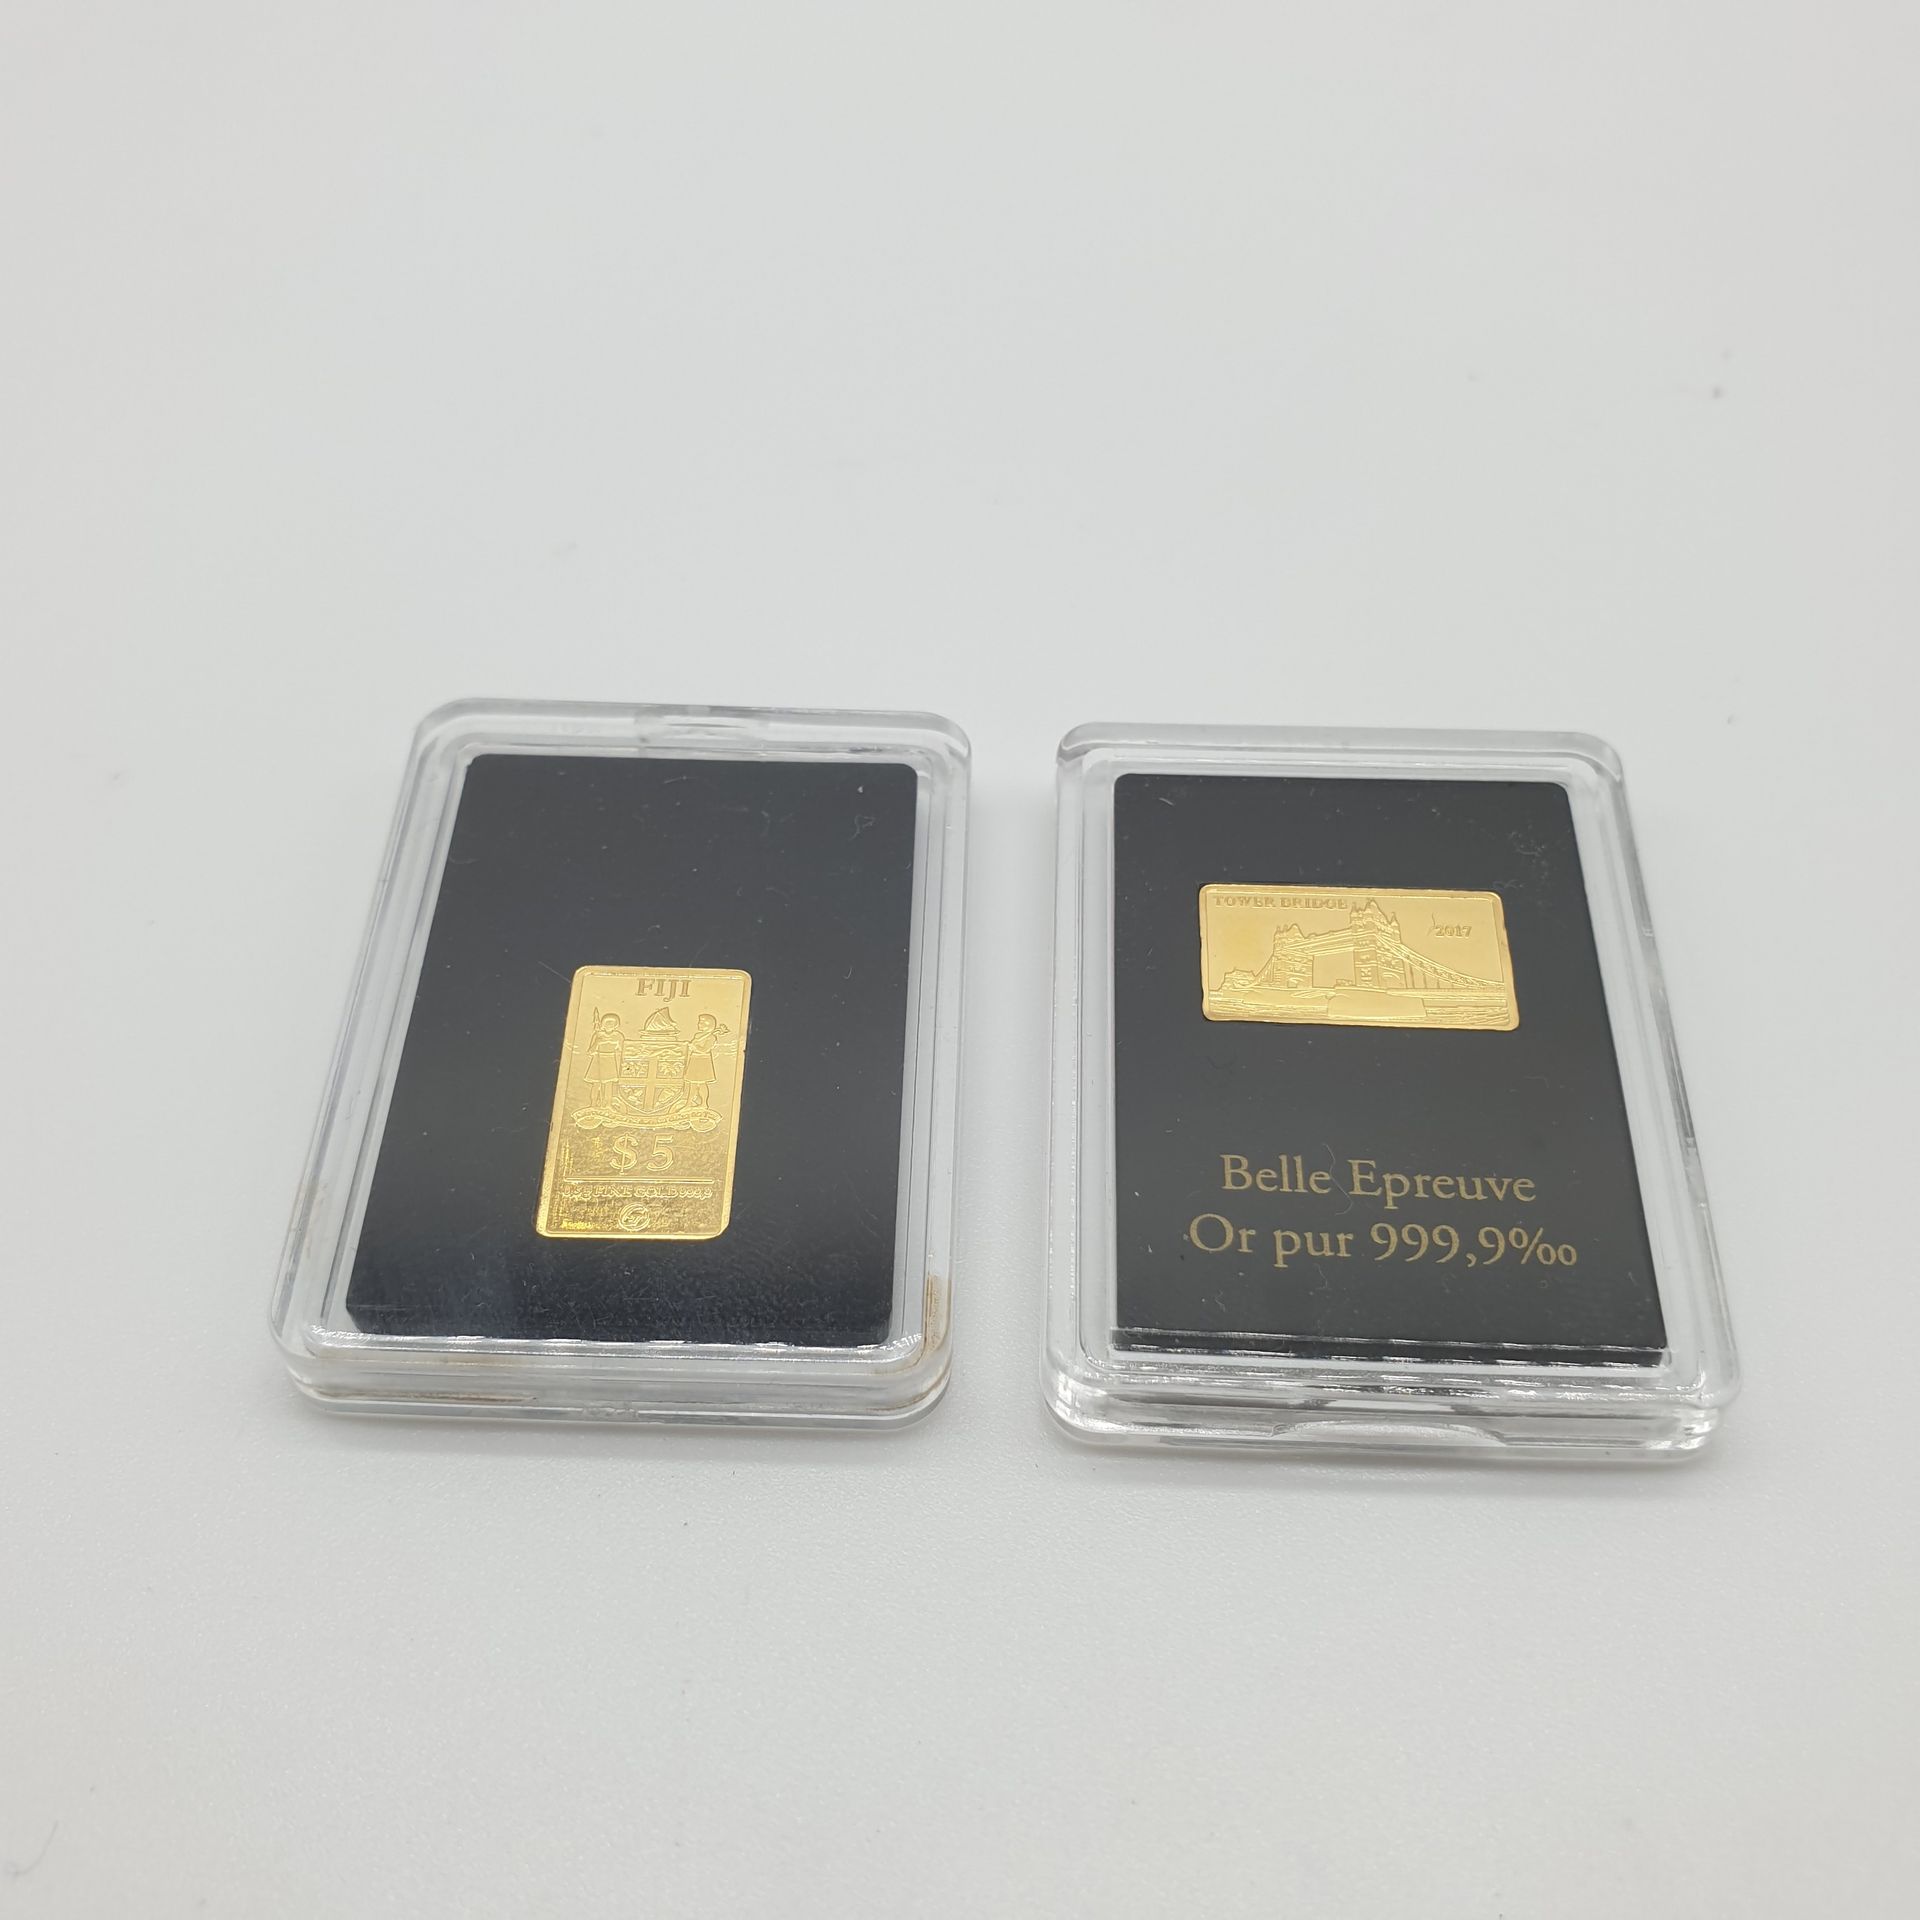 Null 两枚999.9%纯金样币的吸塑包装

塔桥2017

埃菲尔铁塔 2017

重量 : 1,01 g